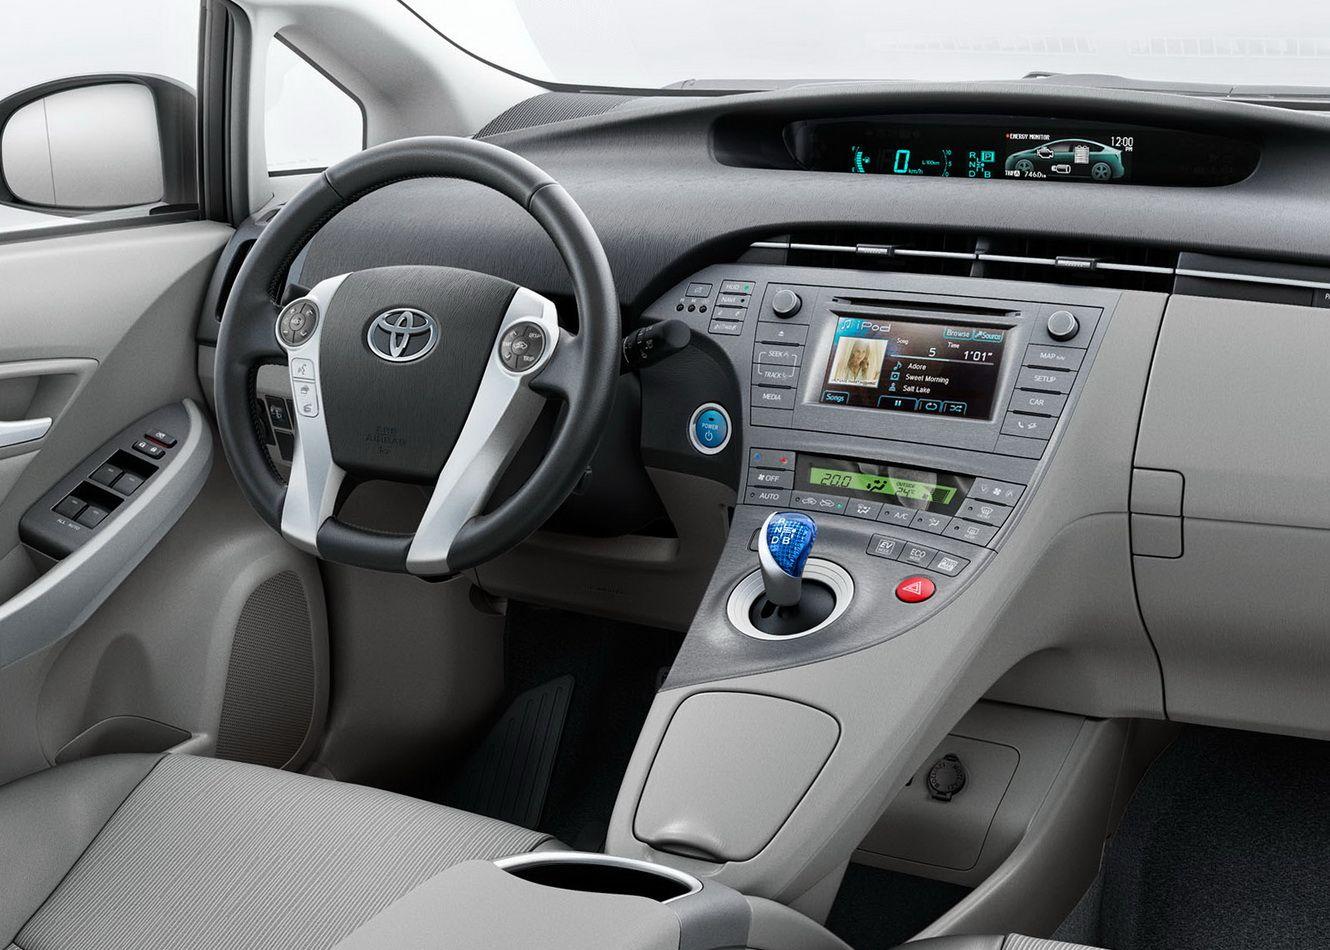 Toyota Prius Interior Wallpaper Full Screen. When I get a car